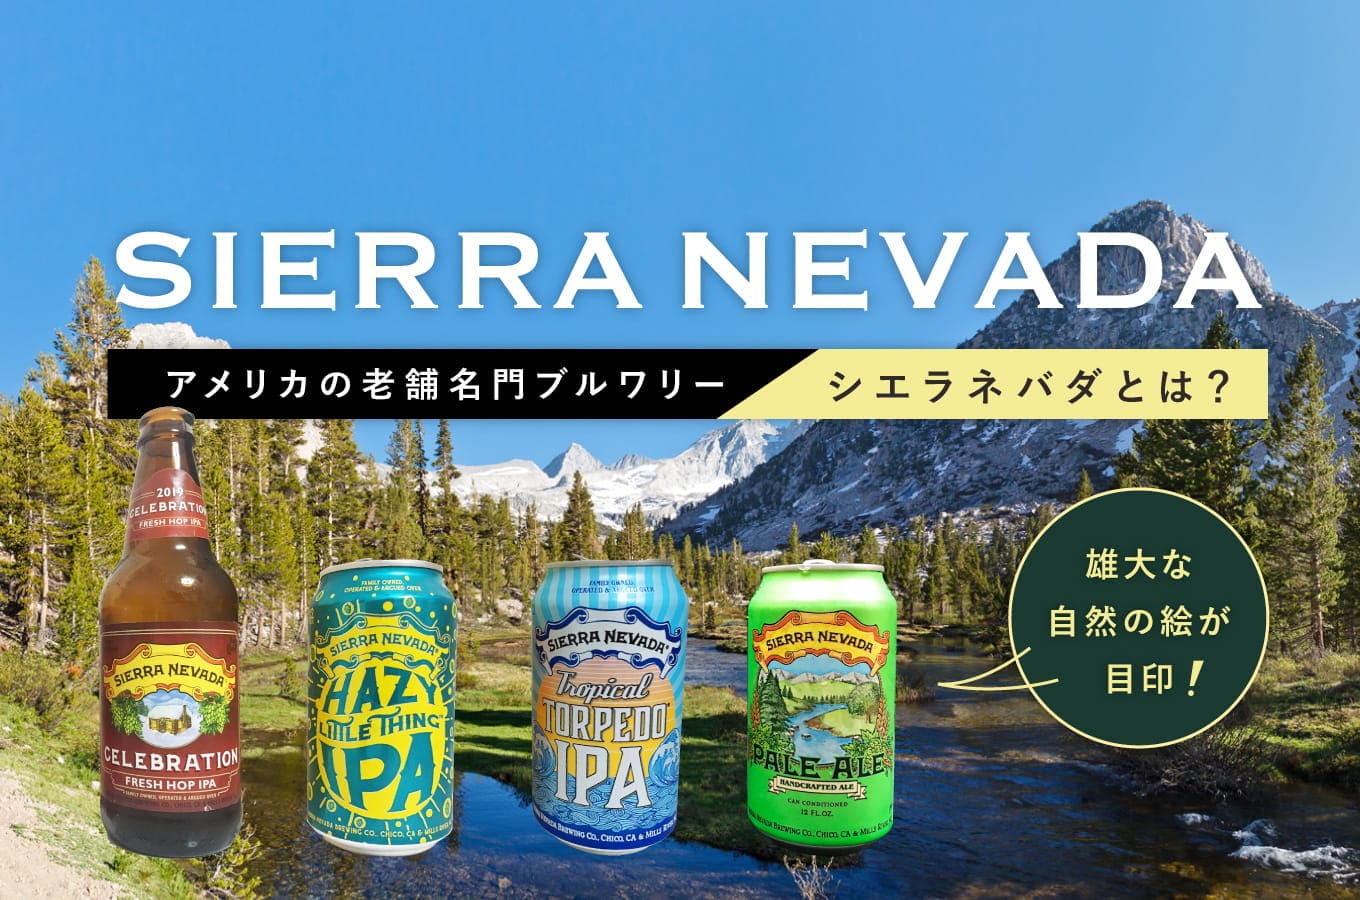 Sierra Nevada Brewing（シエラネバダブリューイング）とは？アメリカの伝説的なブルワリー